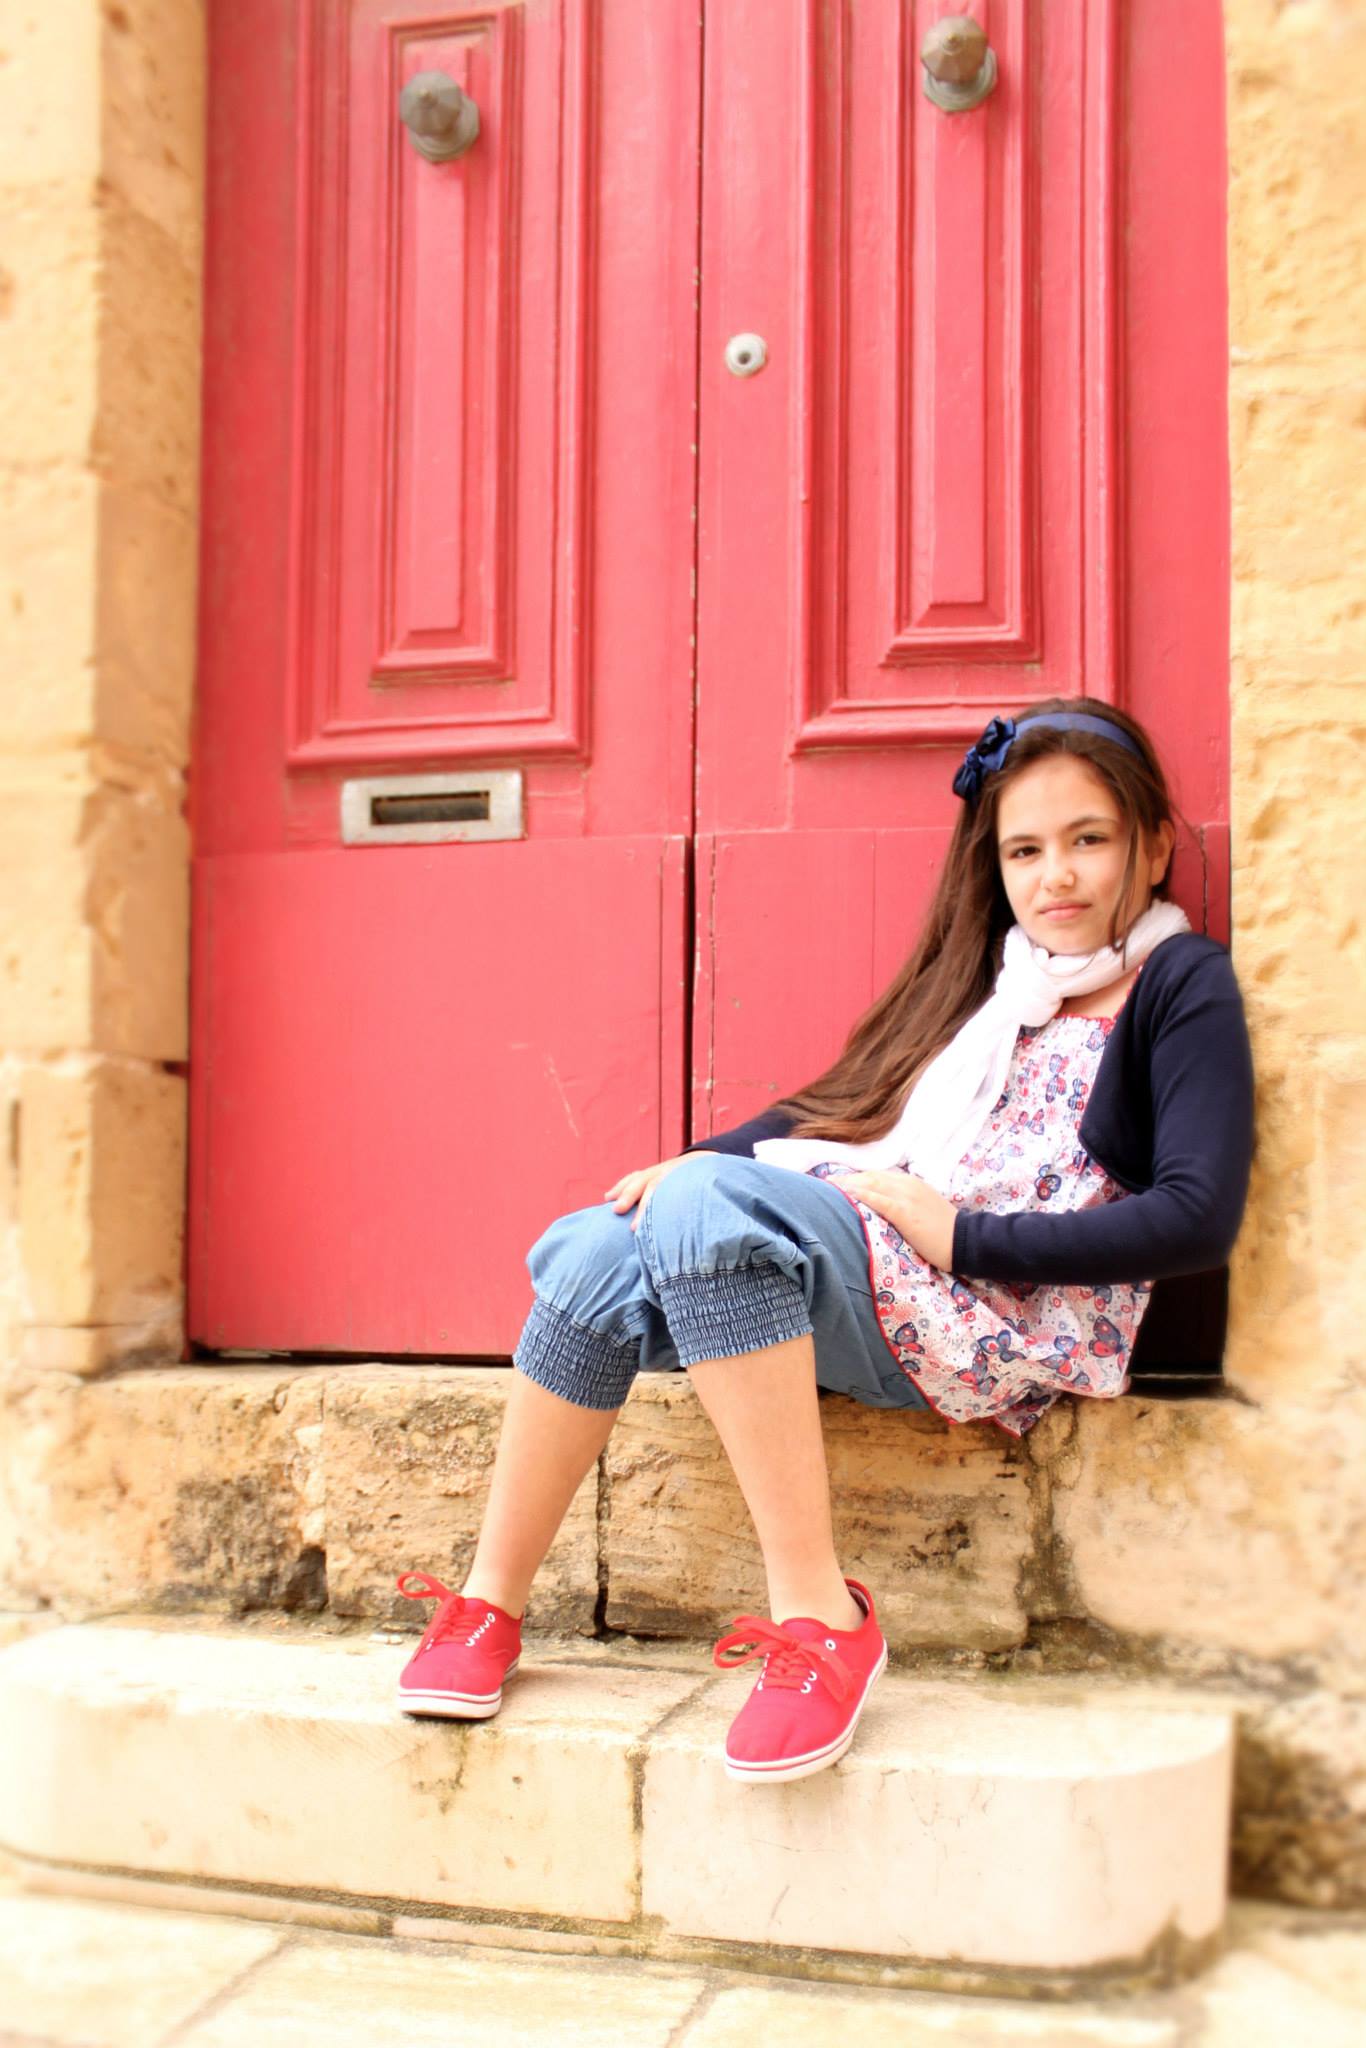 Exclusive interview with Gaia Cauchi from Malta (Junior Eurovision 2013)